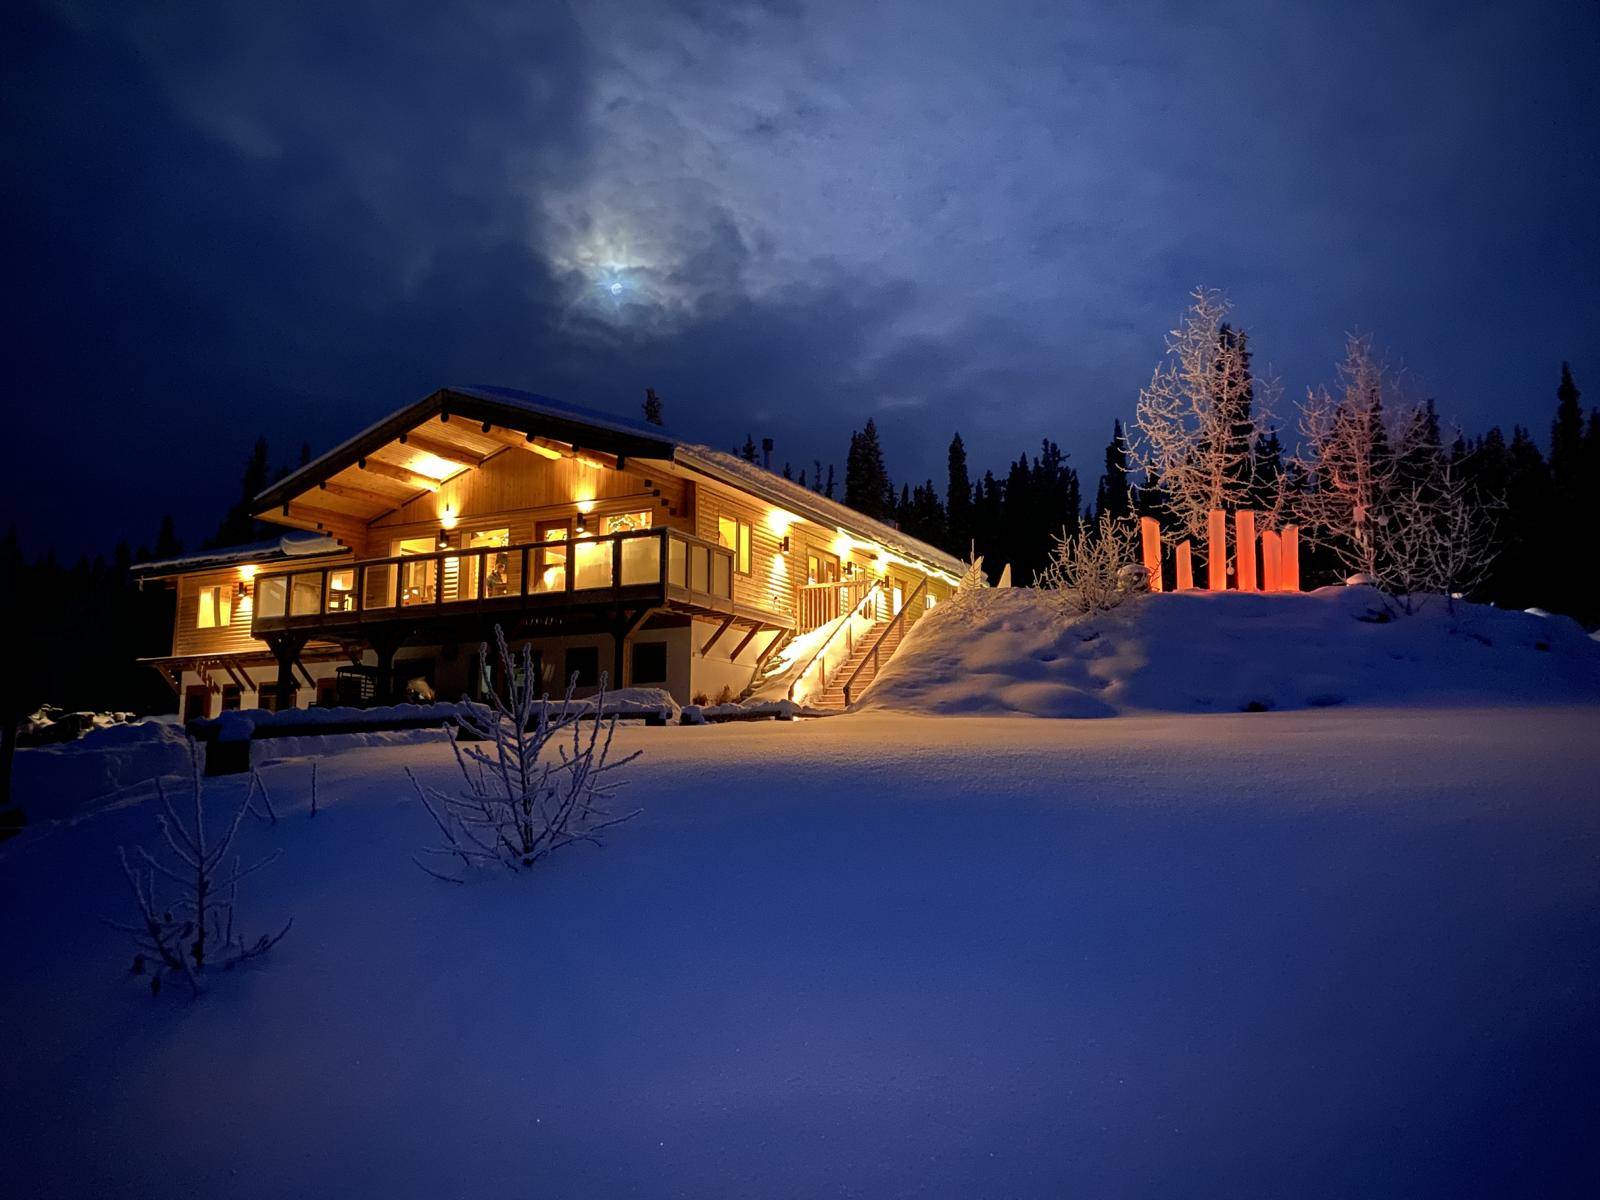 Restaurant lit at night, moon over it, deep snow